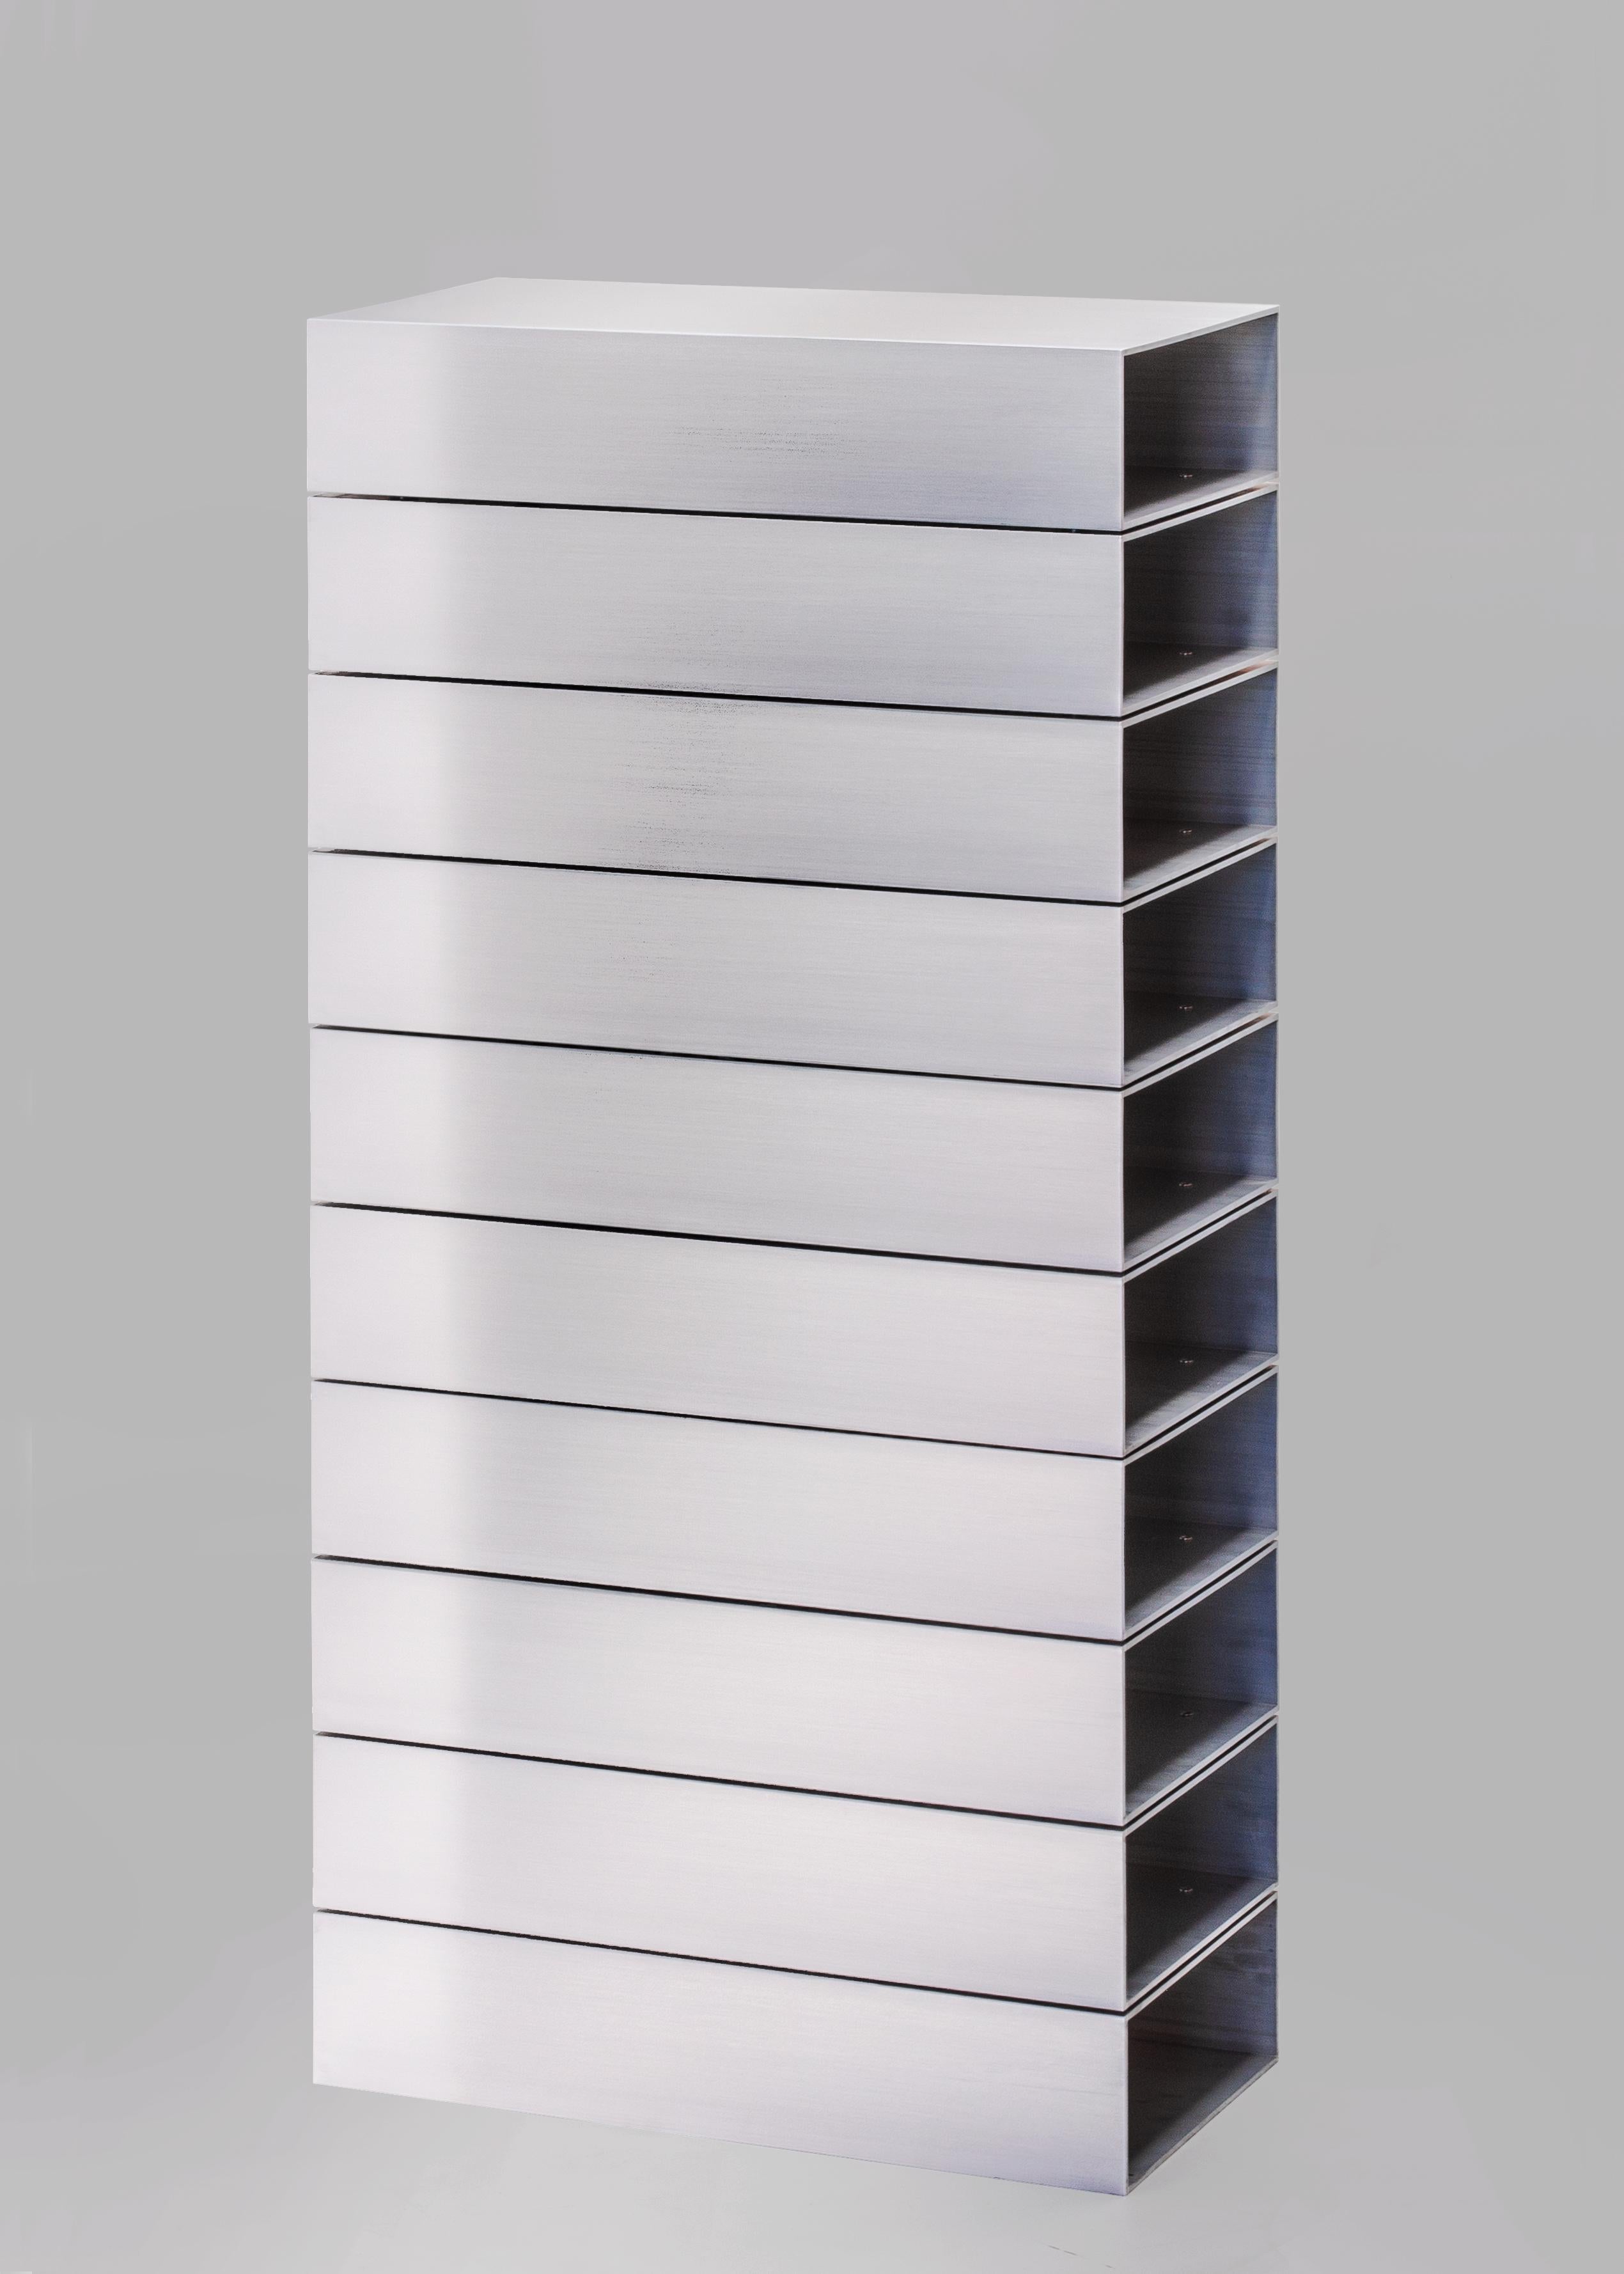 Modern Stack Shelf in Brushed Aluminium by Johan Viladrich For Sale